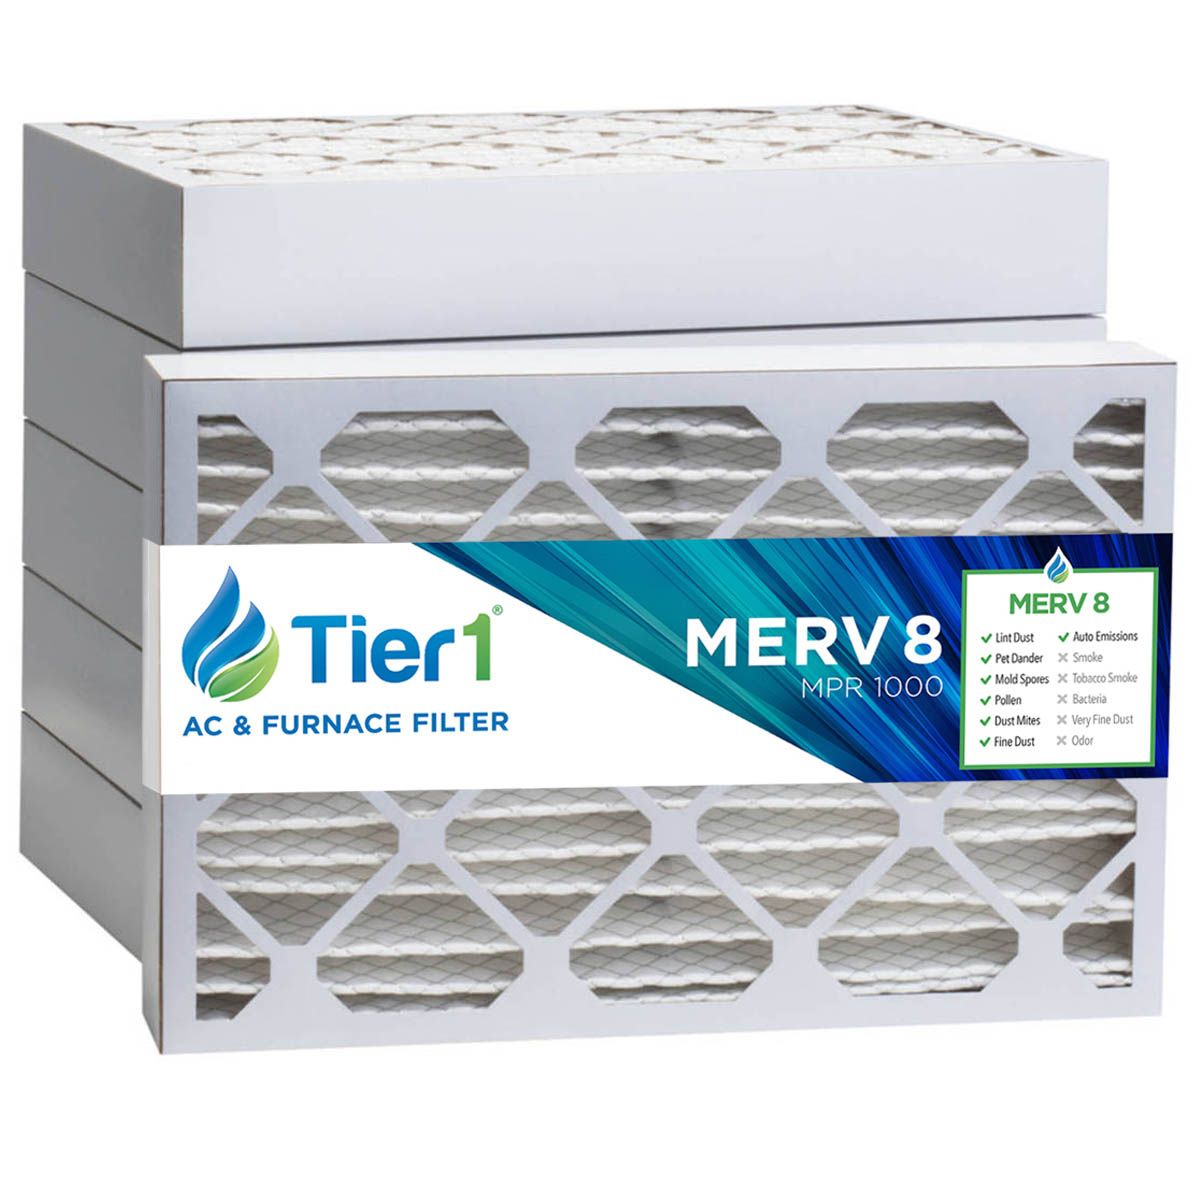 20x25x4 Merv 8 Universal Air Filter By Tier1 (Single Filter)